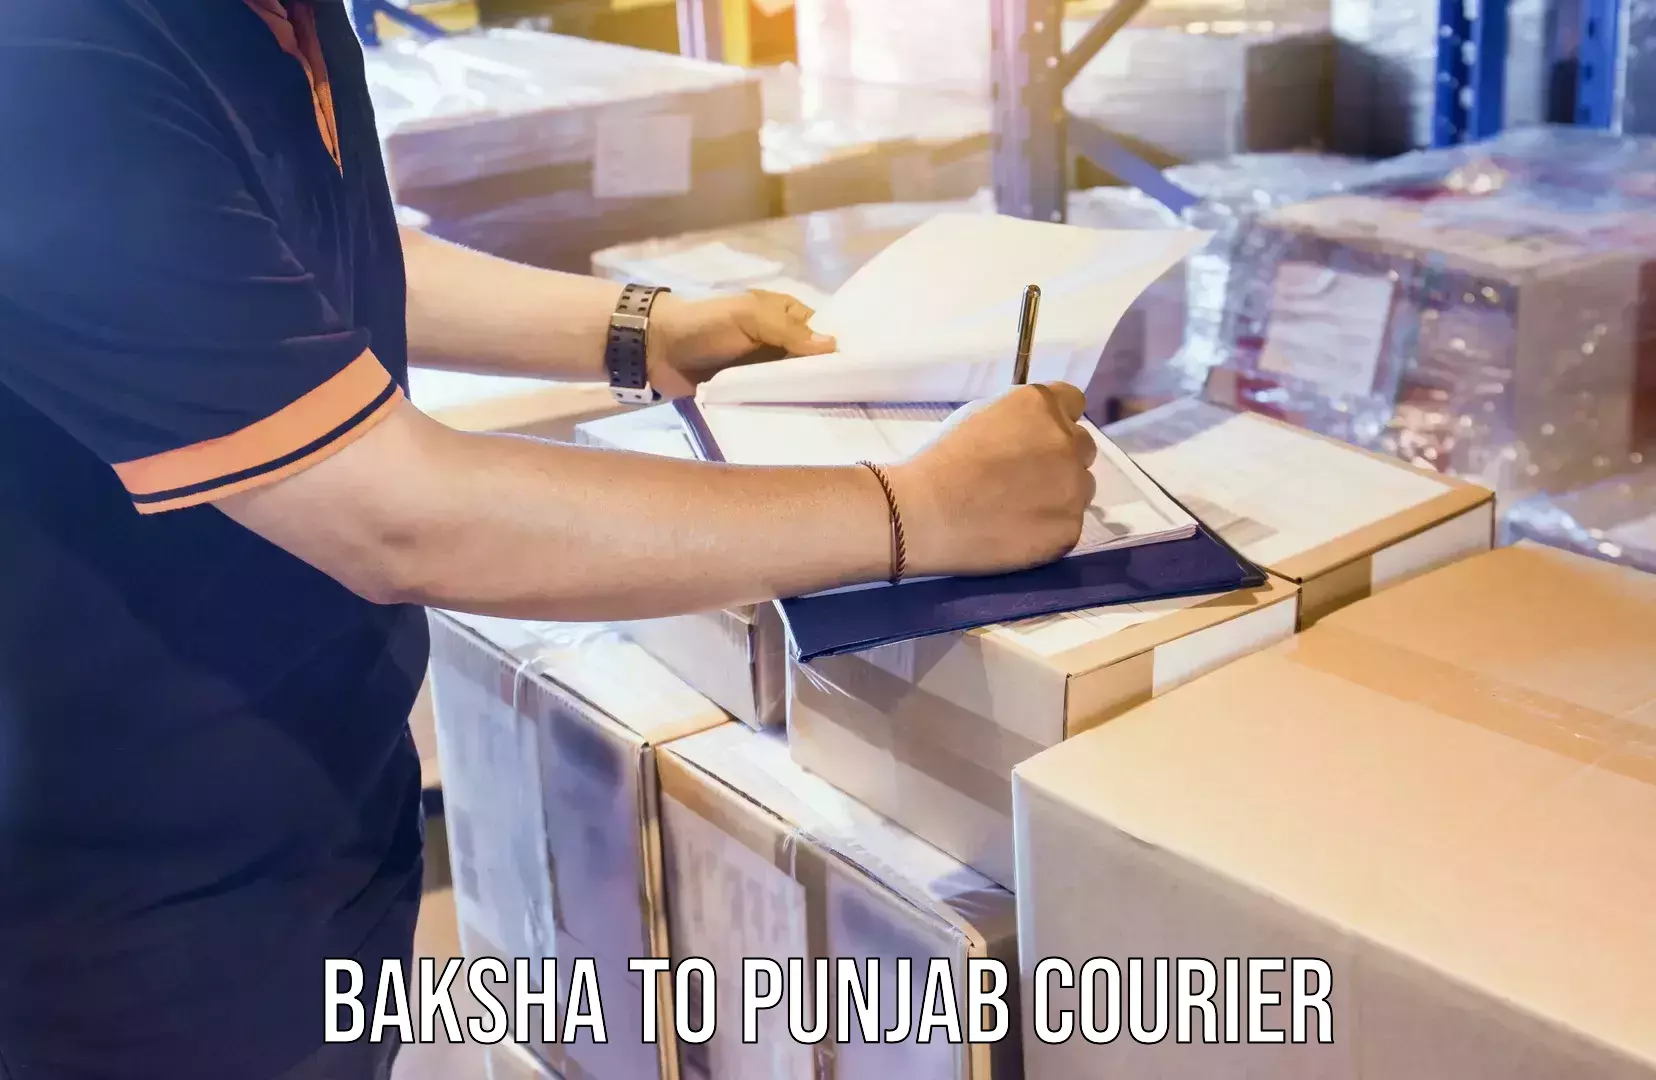 Urgent courier needs in Baksha to Punjab